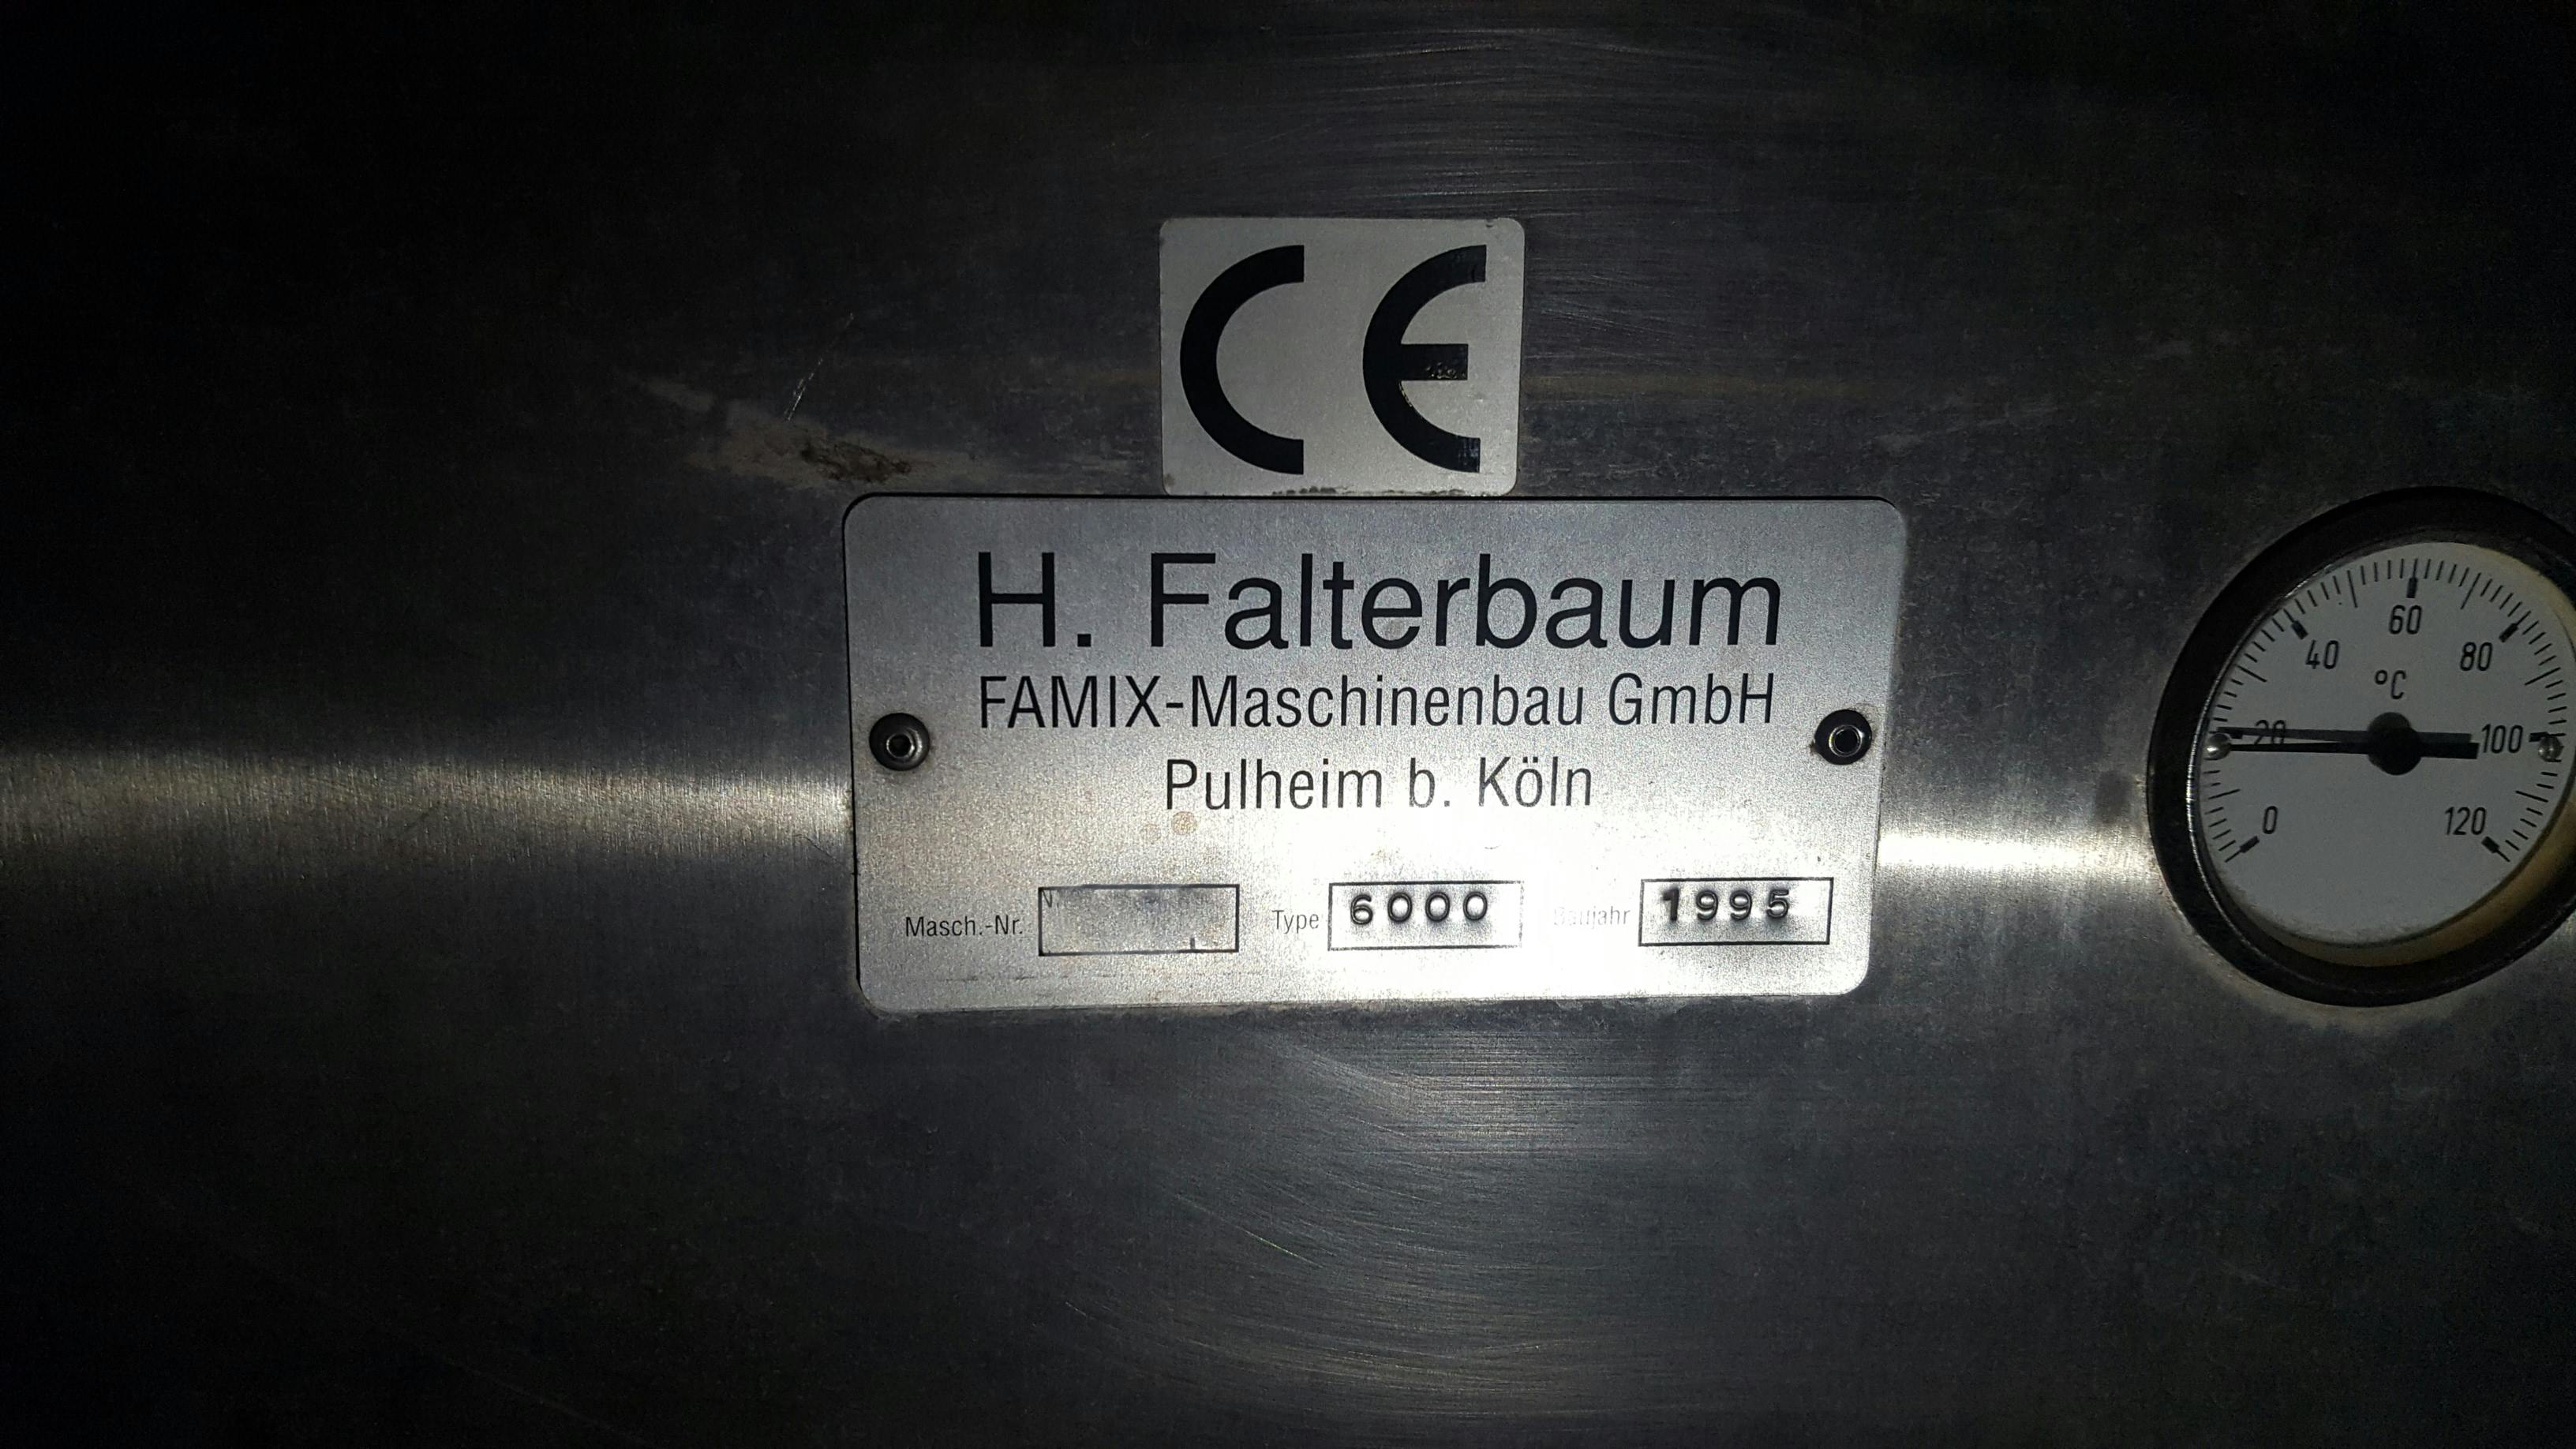 Placa de identificación of H. FALTERBAUM FAMIX-MASCHINENBAU GMBH Famix 6000